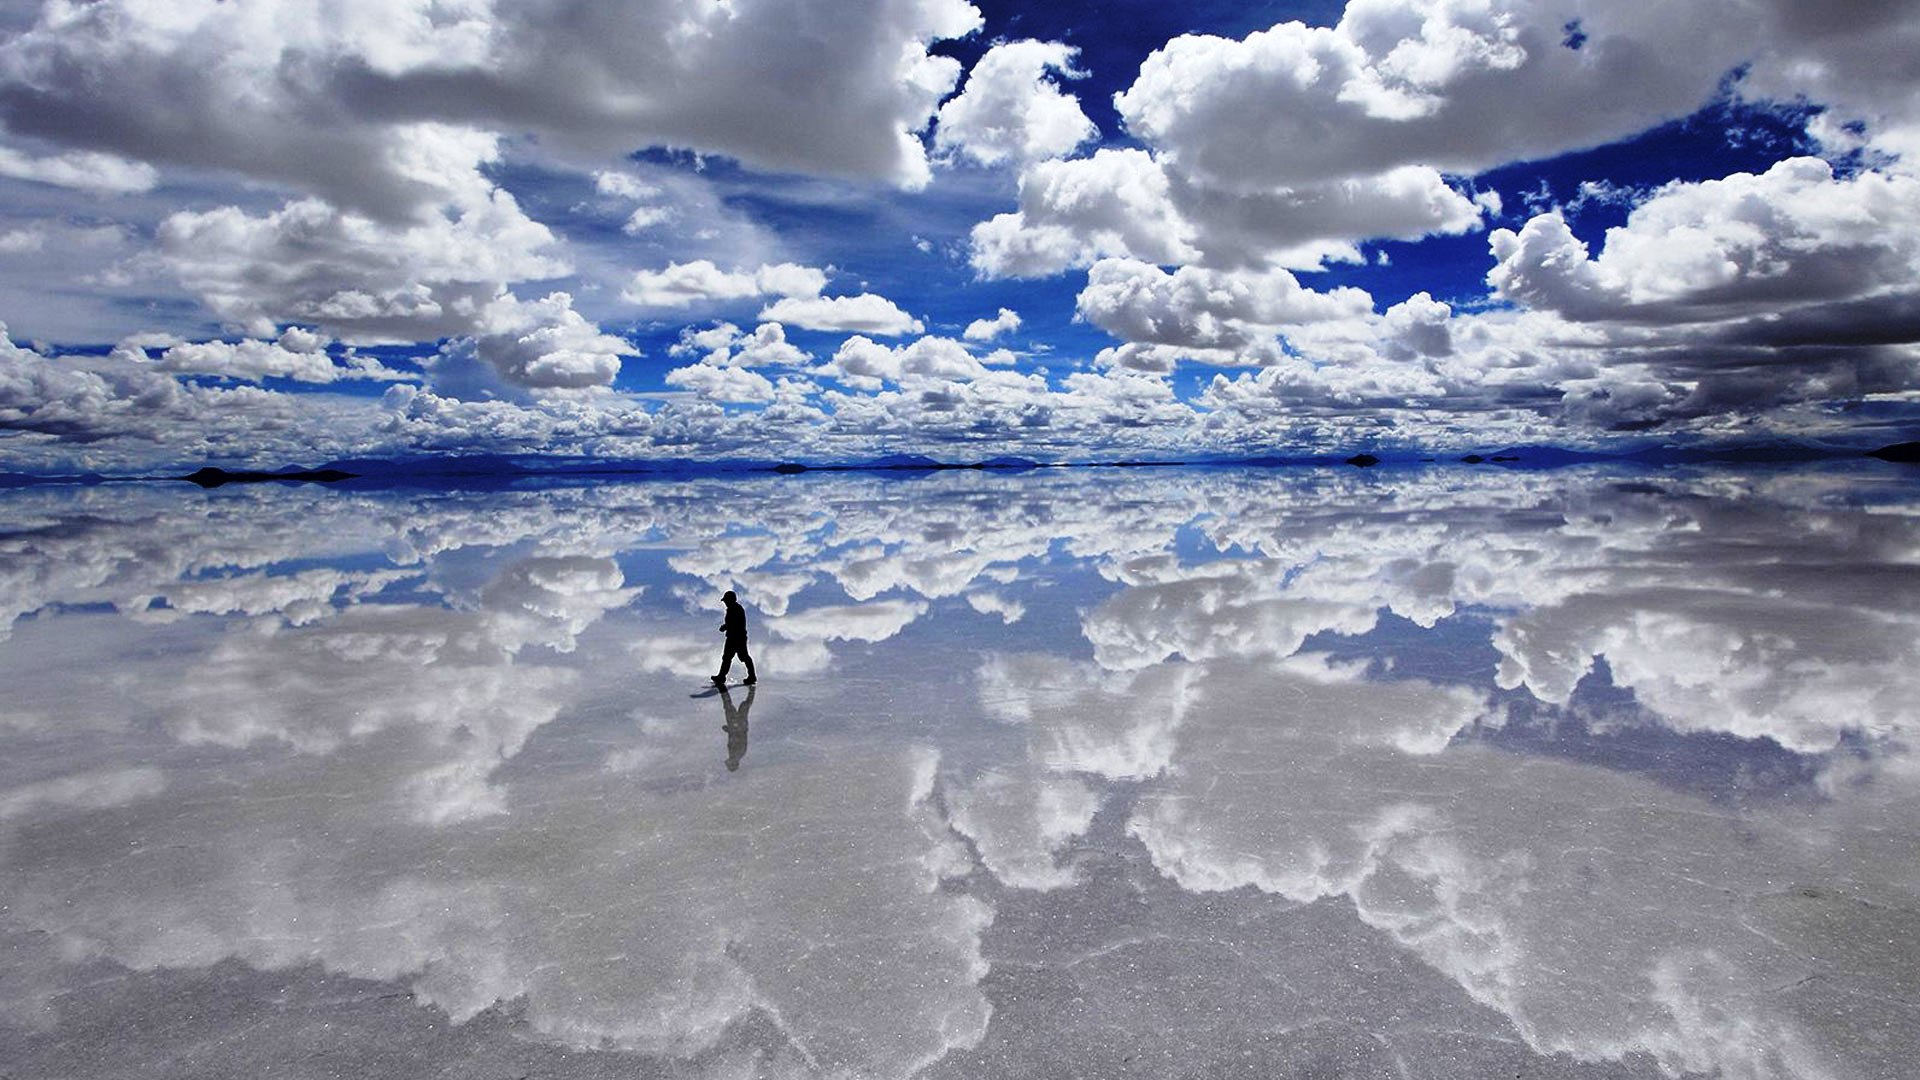 surreal-photos-pt1-salar-de-uyuni-bolivia-salt-flat-mirror.jpg